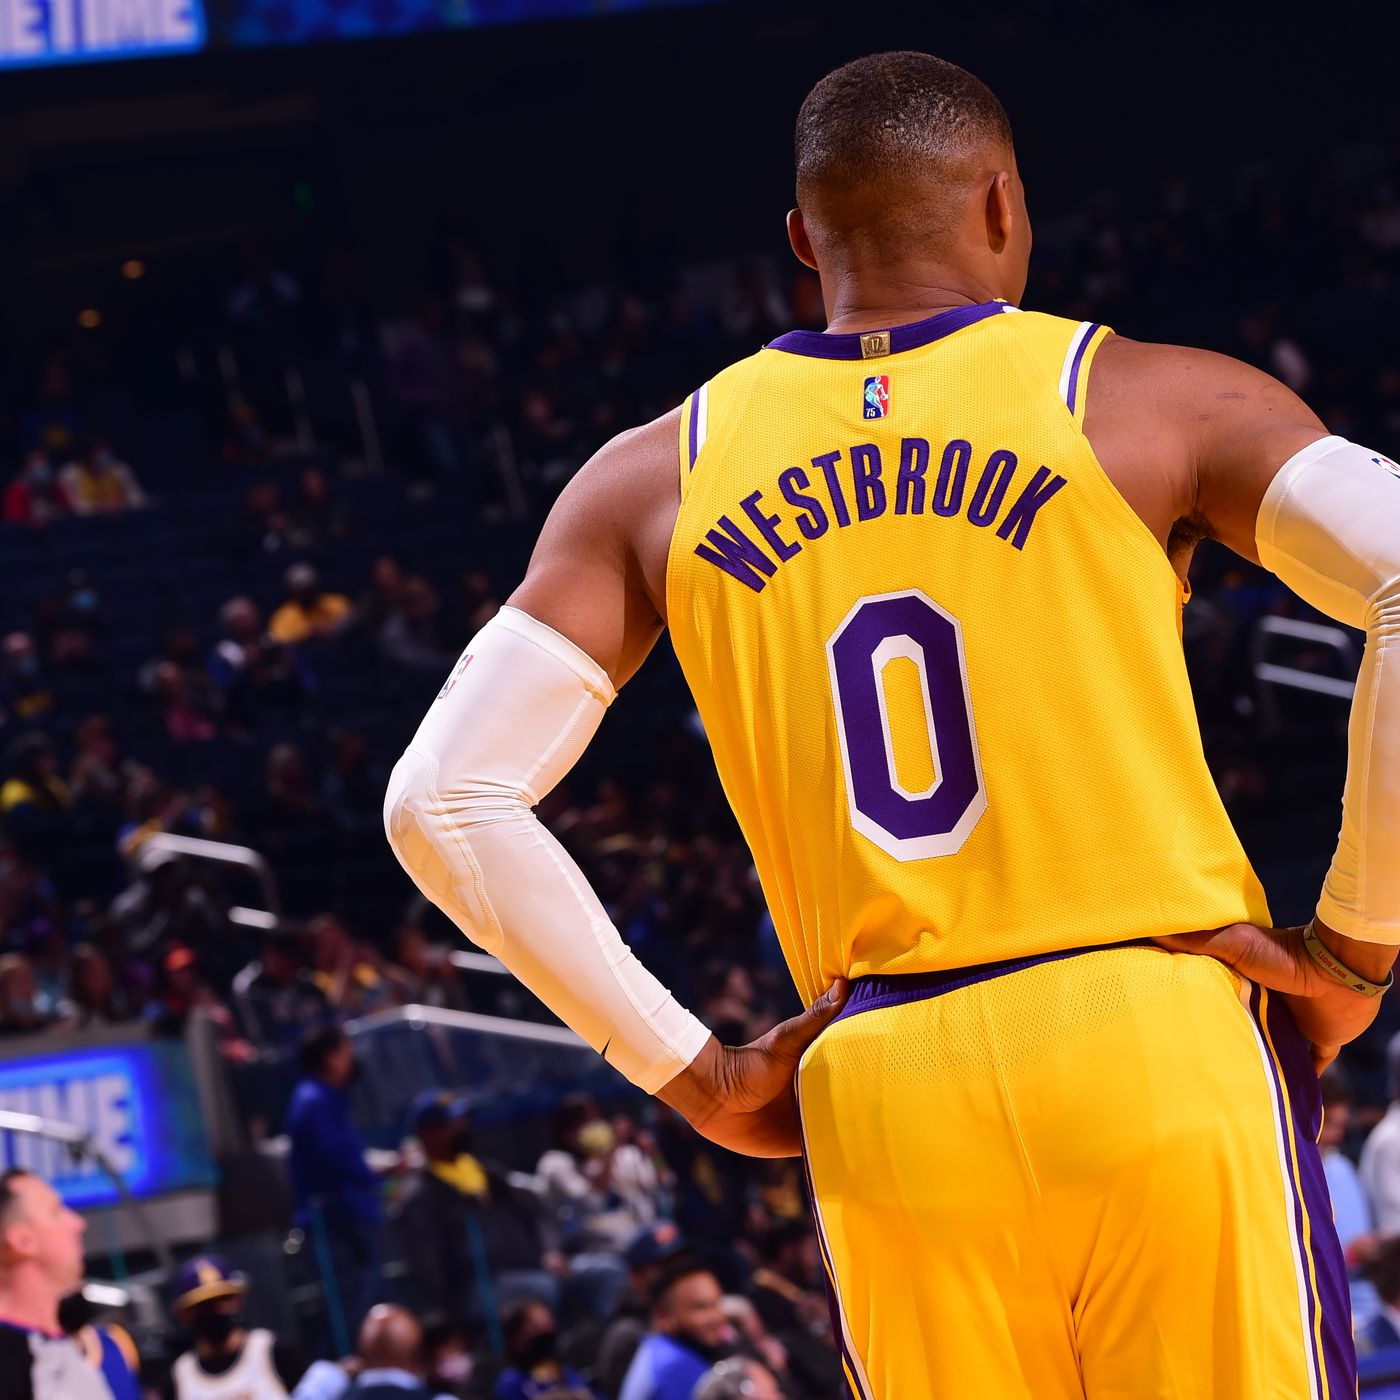 Lakers Uniform Westbrook 0 レイカーズユニホーム種類ユニフォーム